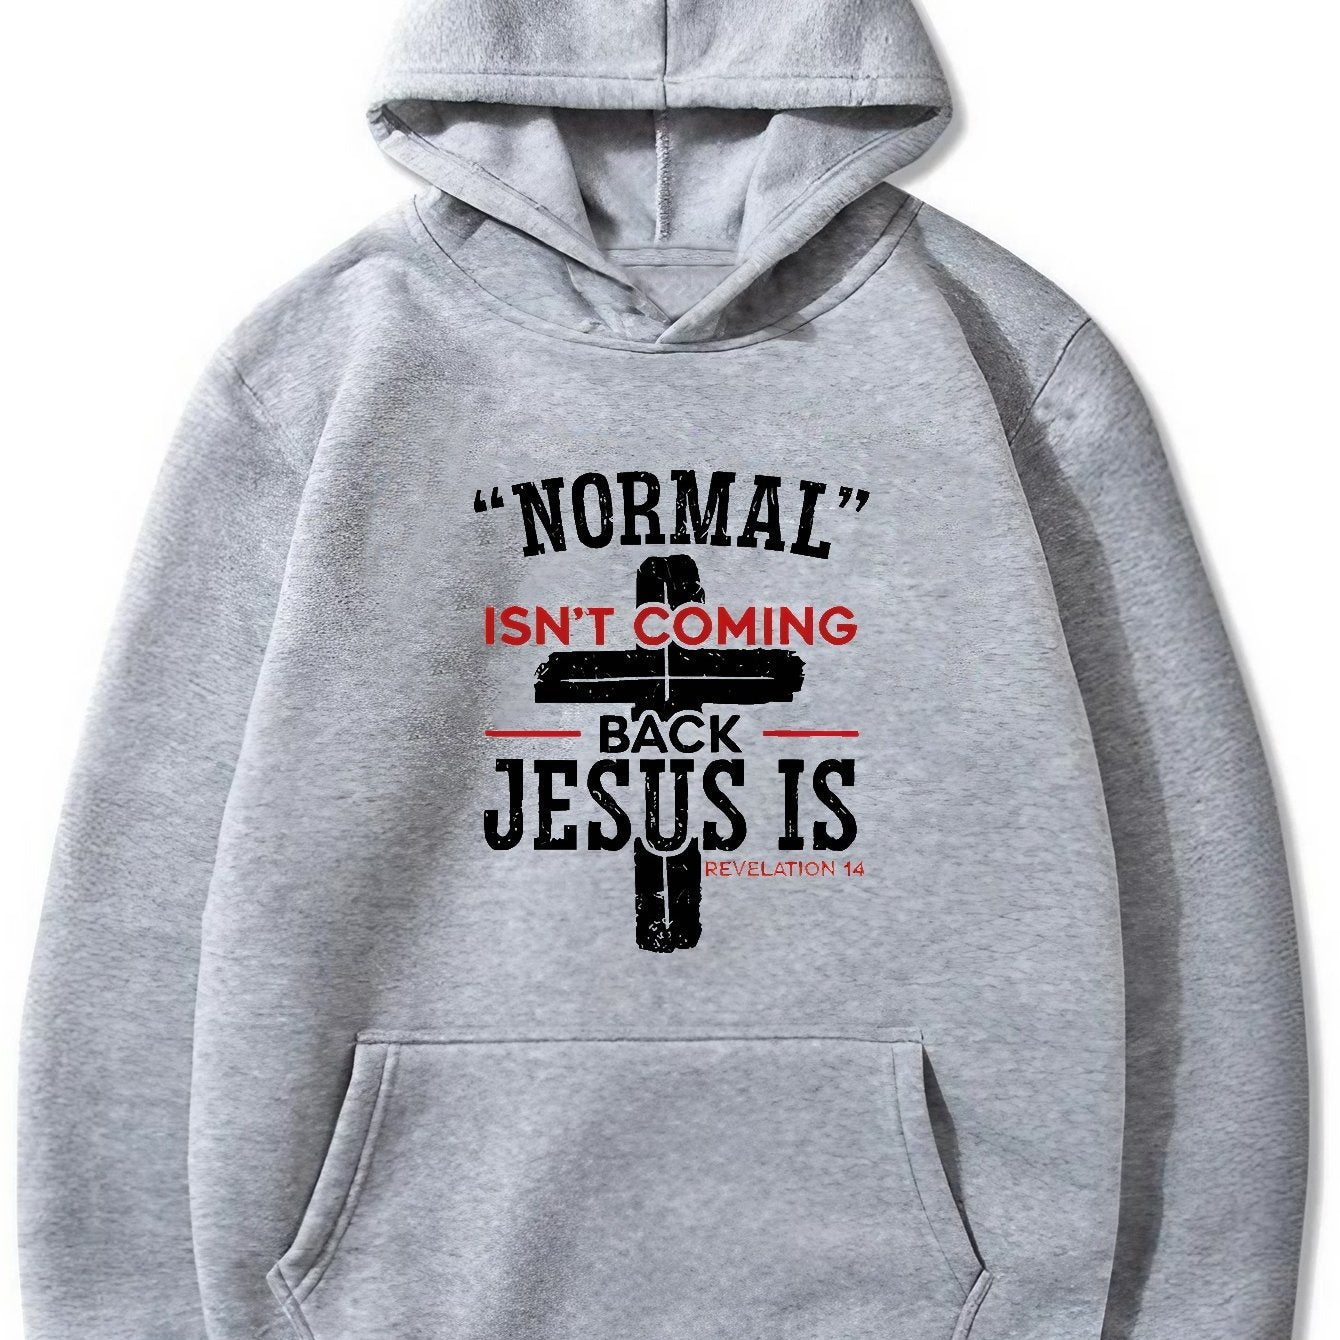 Normal Isn't Coming Back Jesus Is Men's Christian Pullover Hooded Sweatshirt claimedbygoddesigns